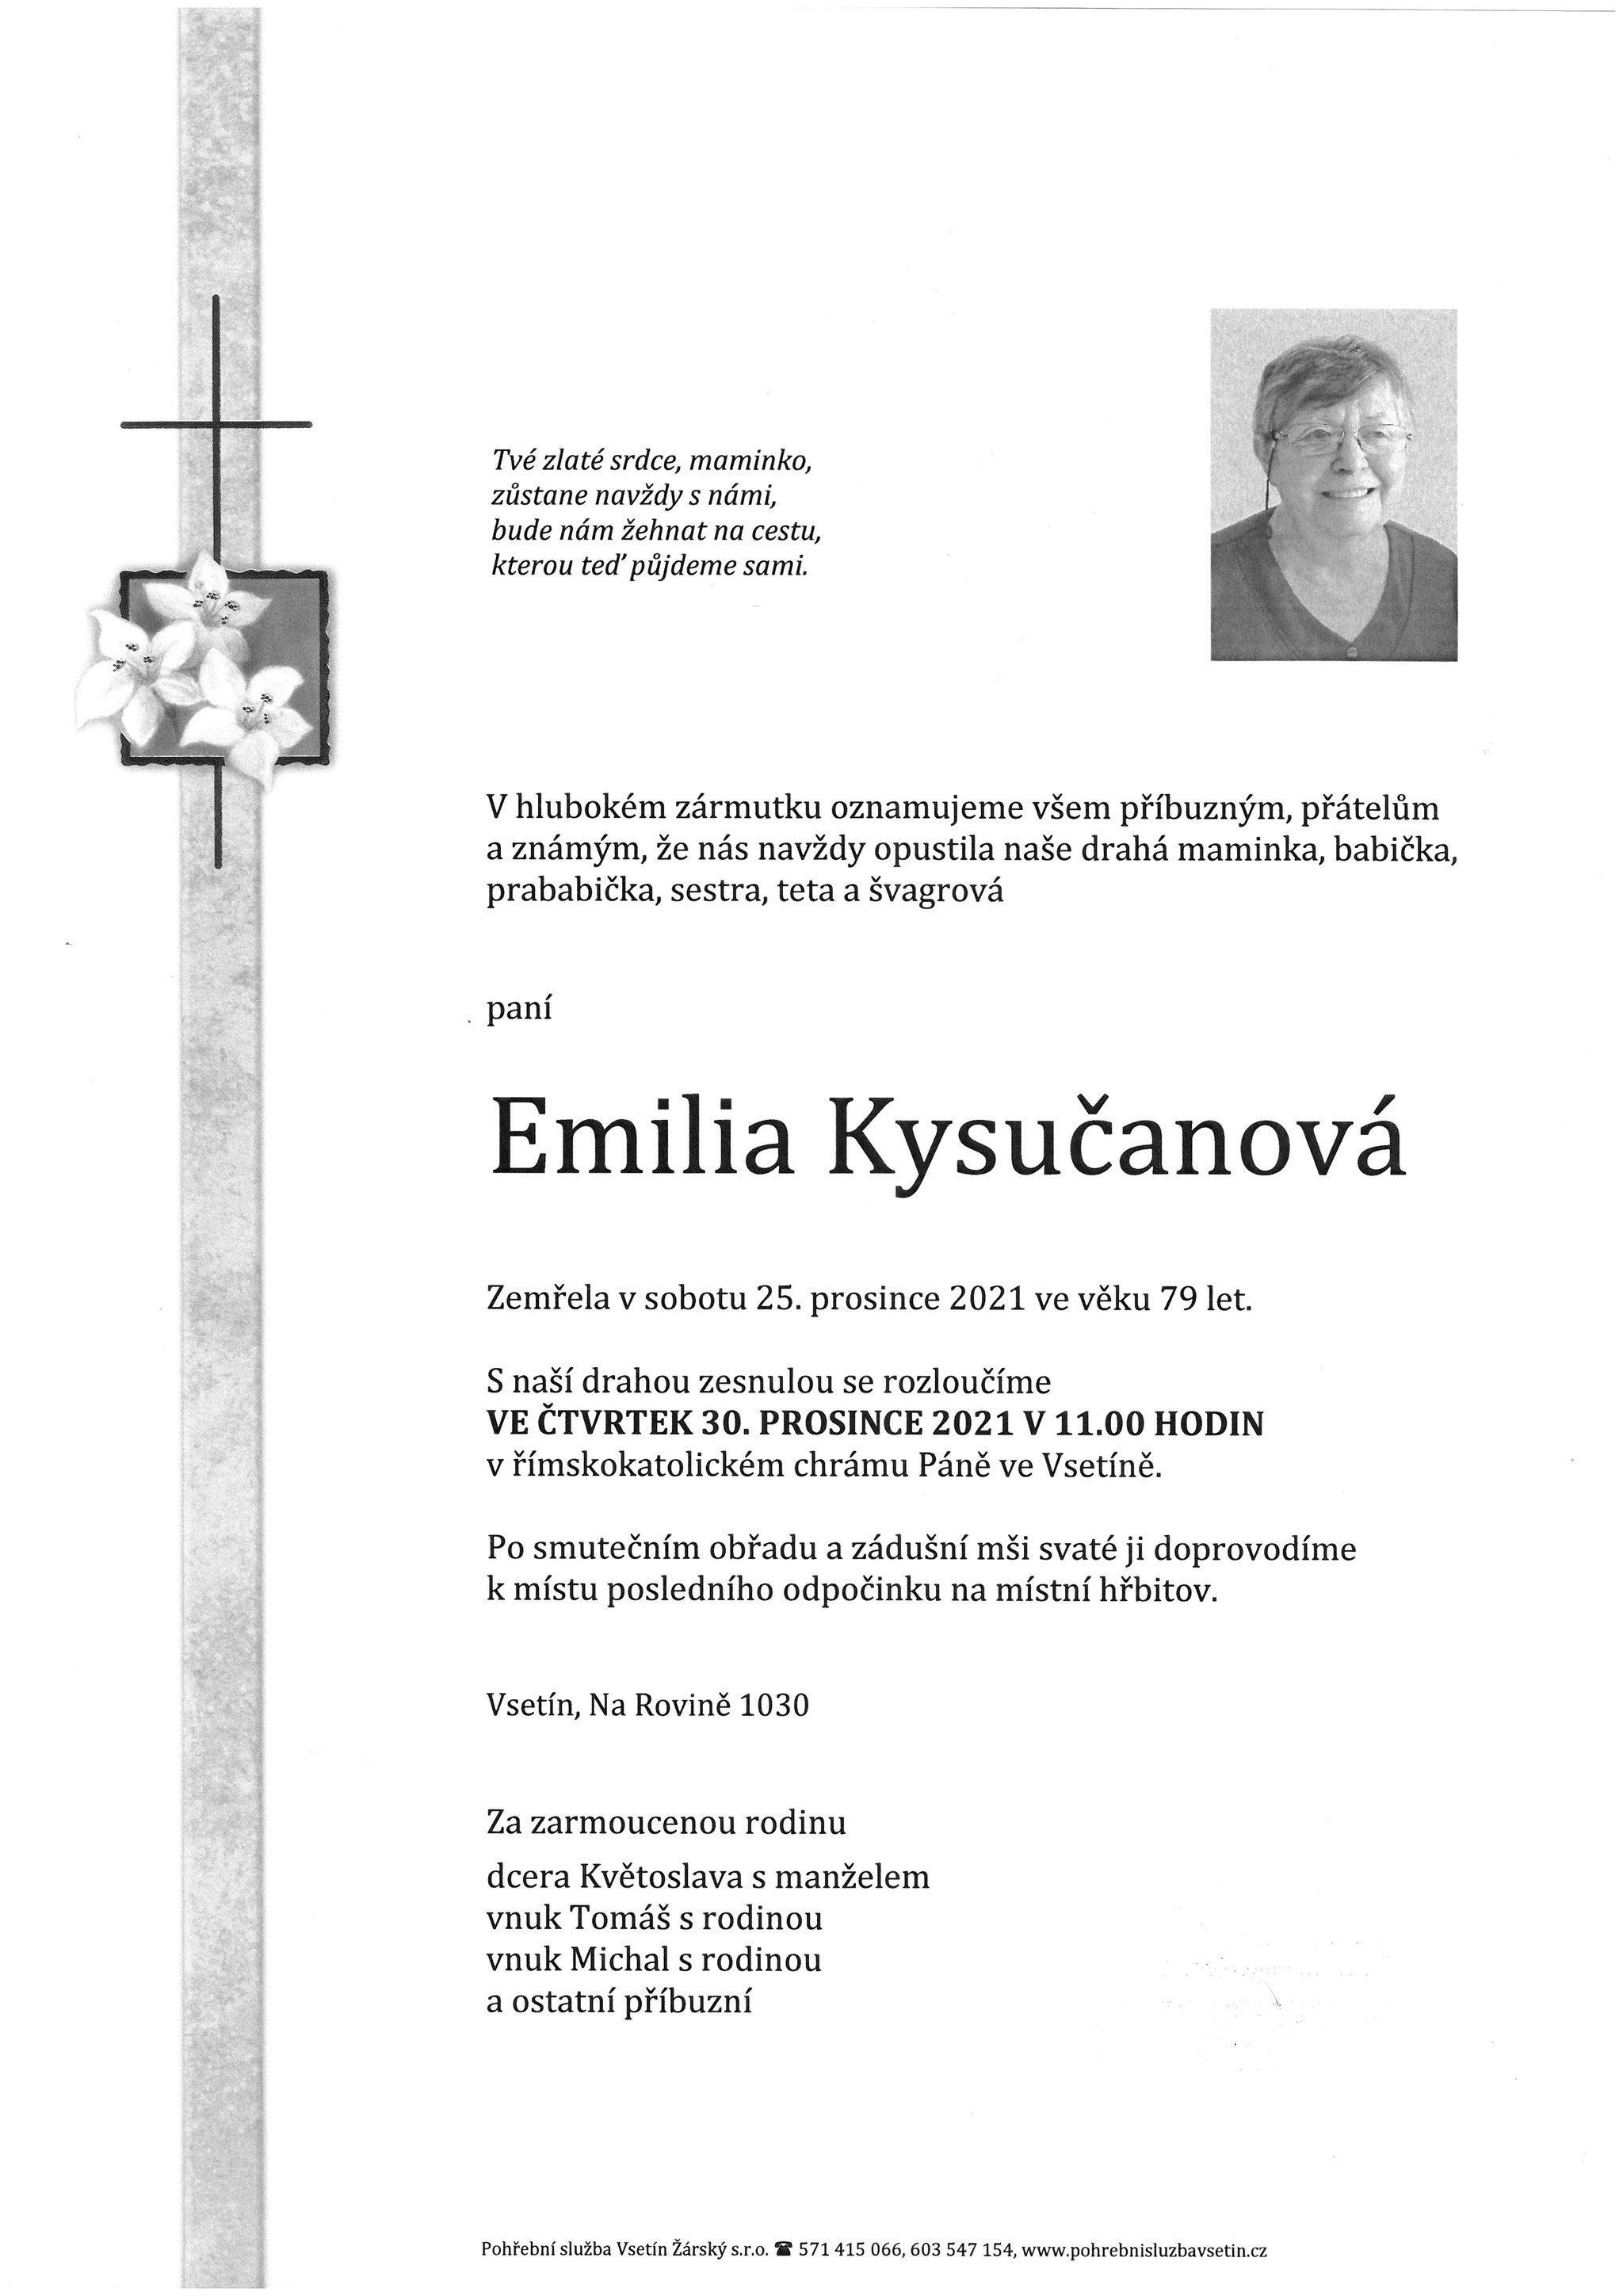 Emilia Kysučanová